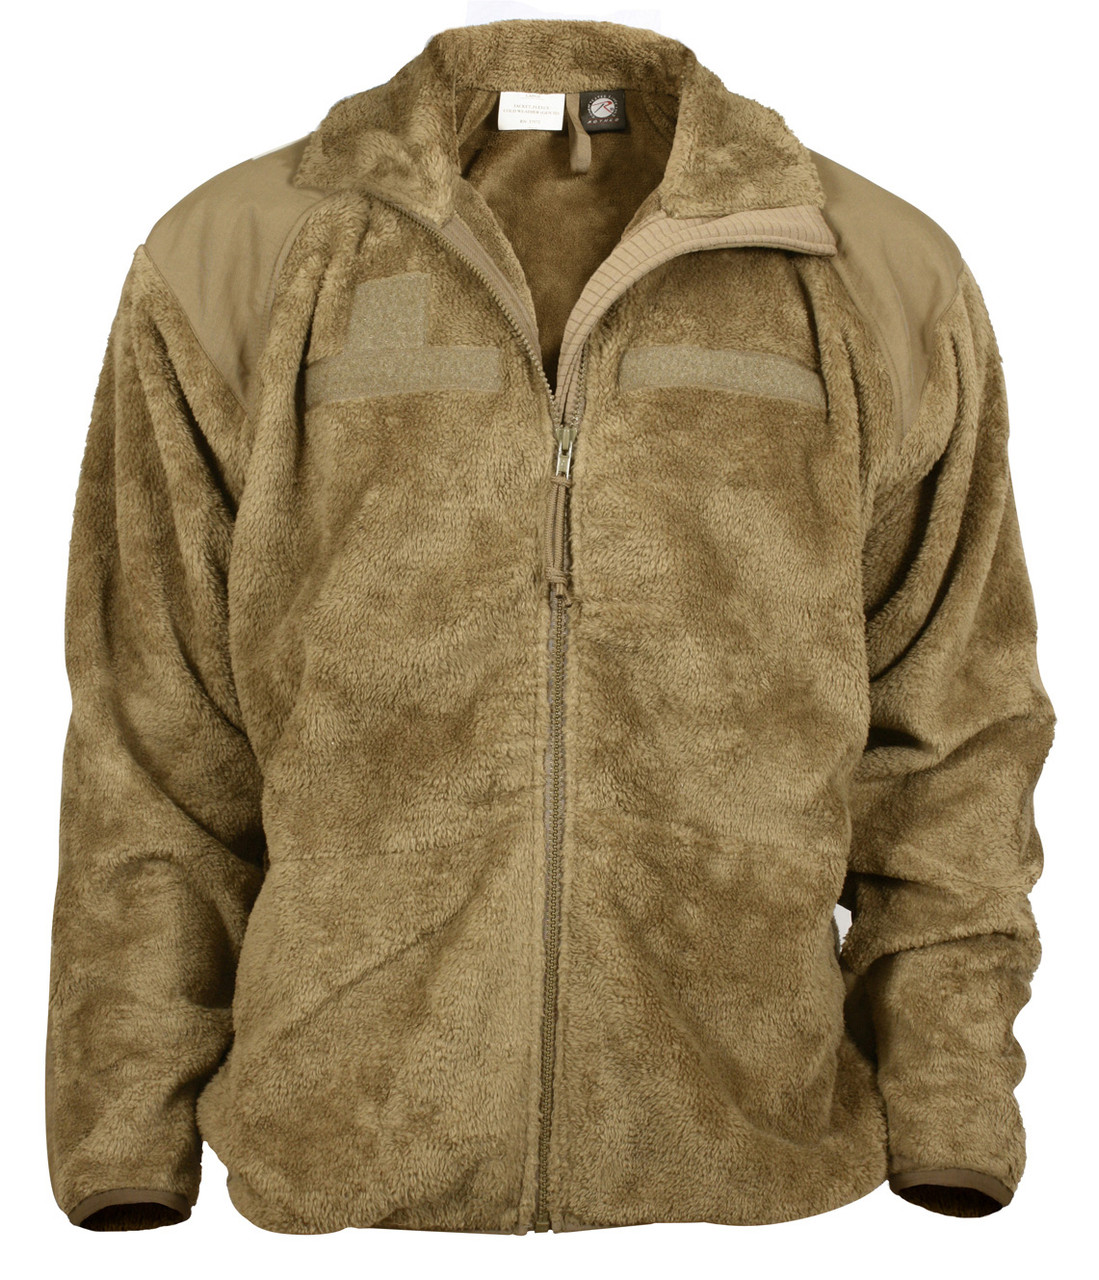 Shop Gen III Level 3 ECWCS Fleece Jackets - Fatigues Army Navy Gear